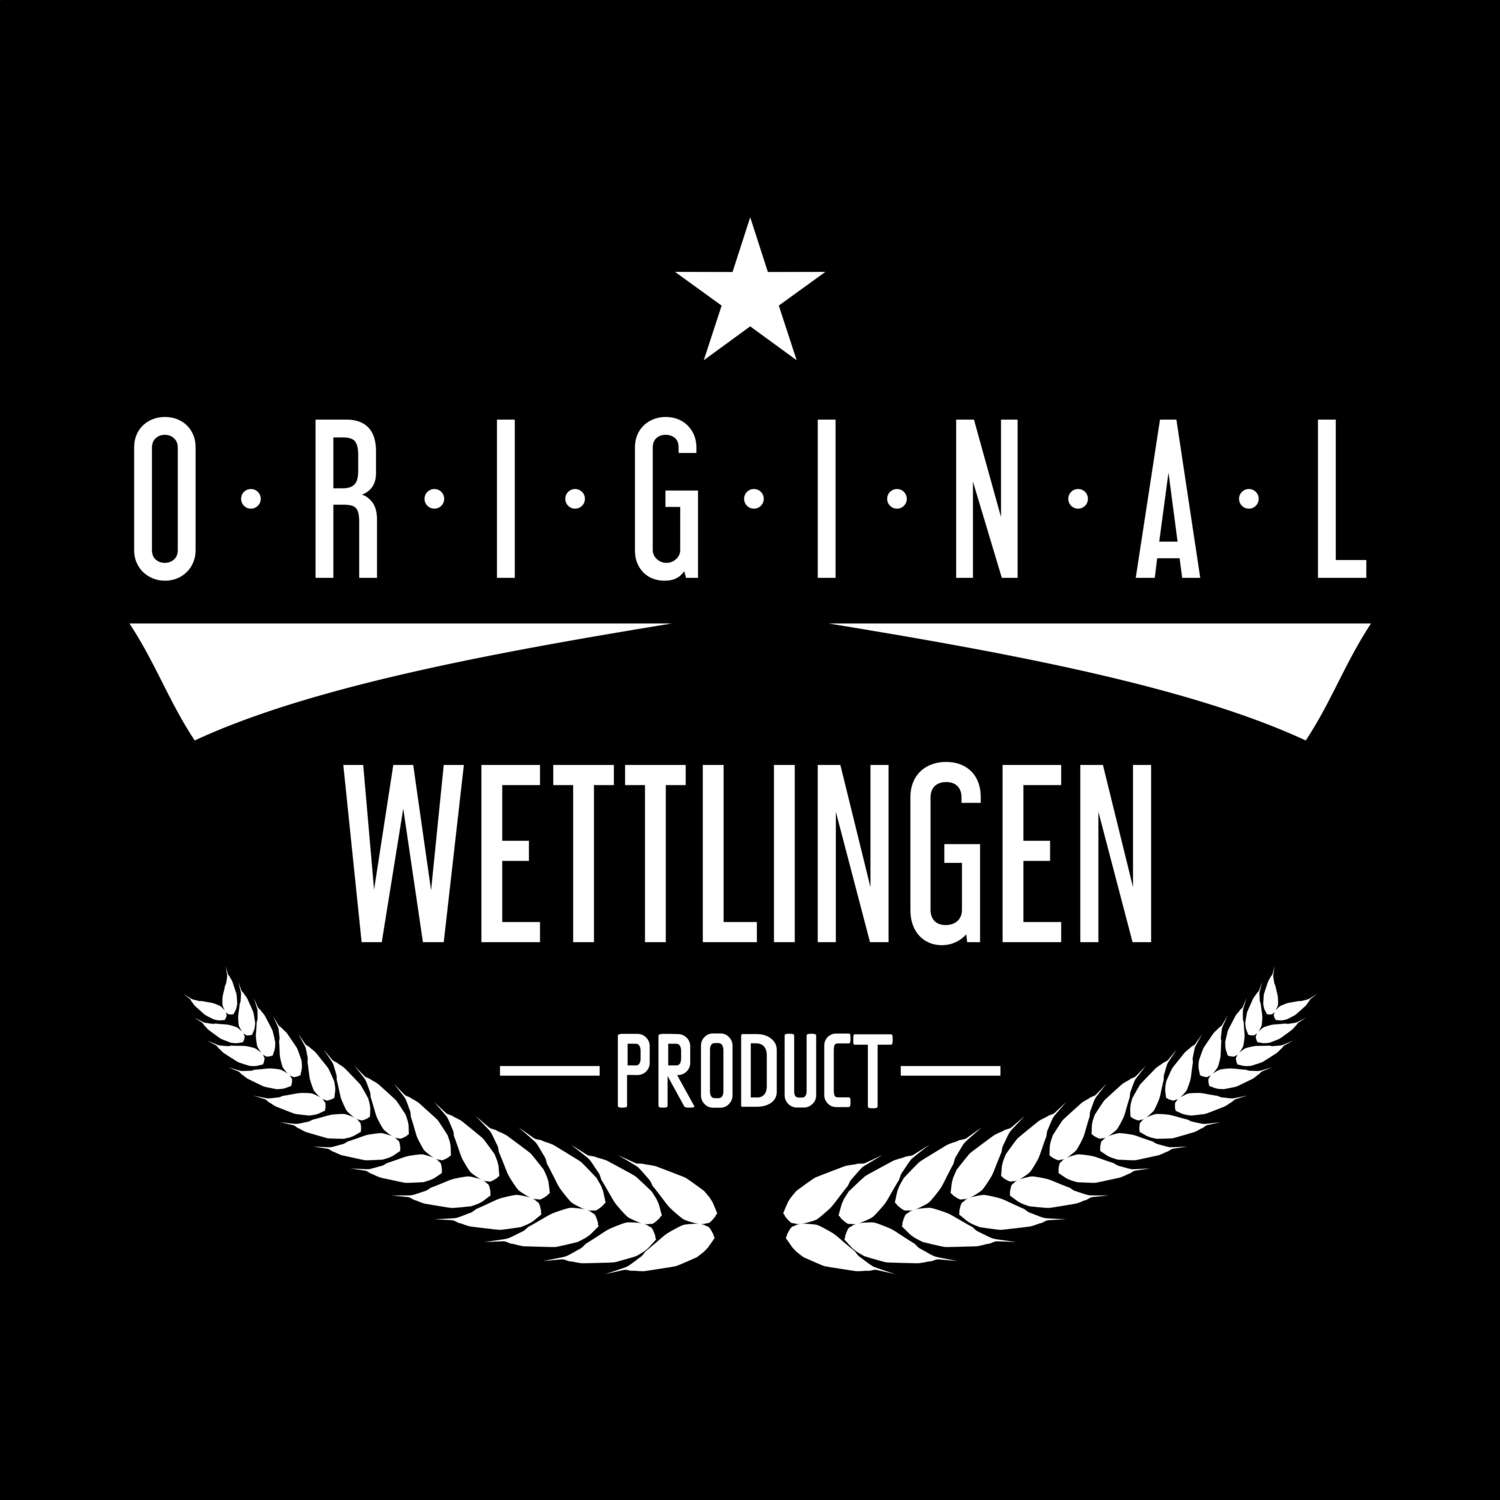 Wettlingen T-Shirt »Original Product«